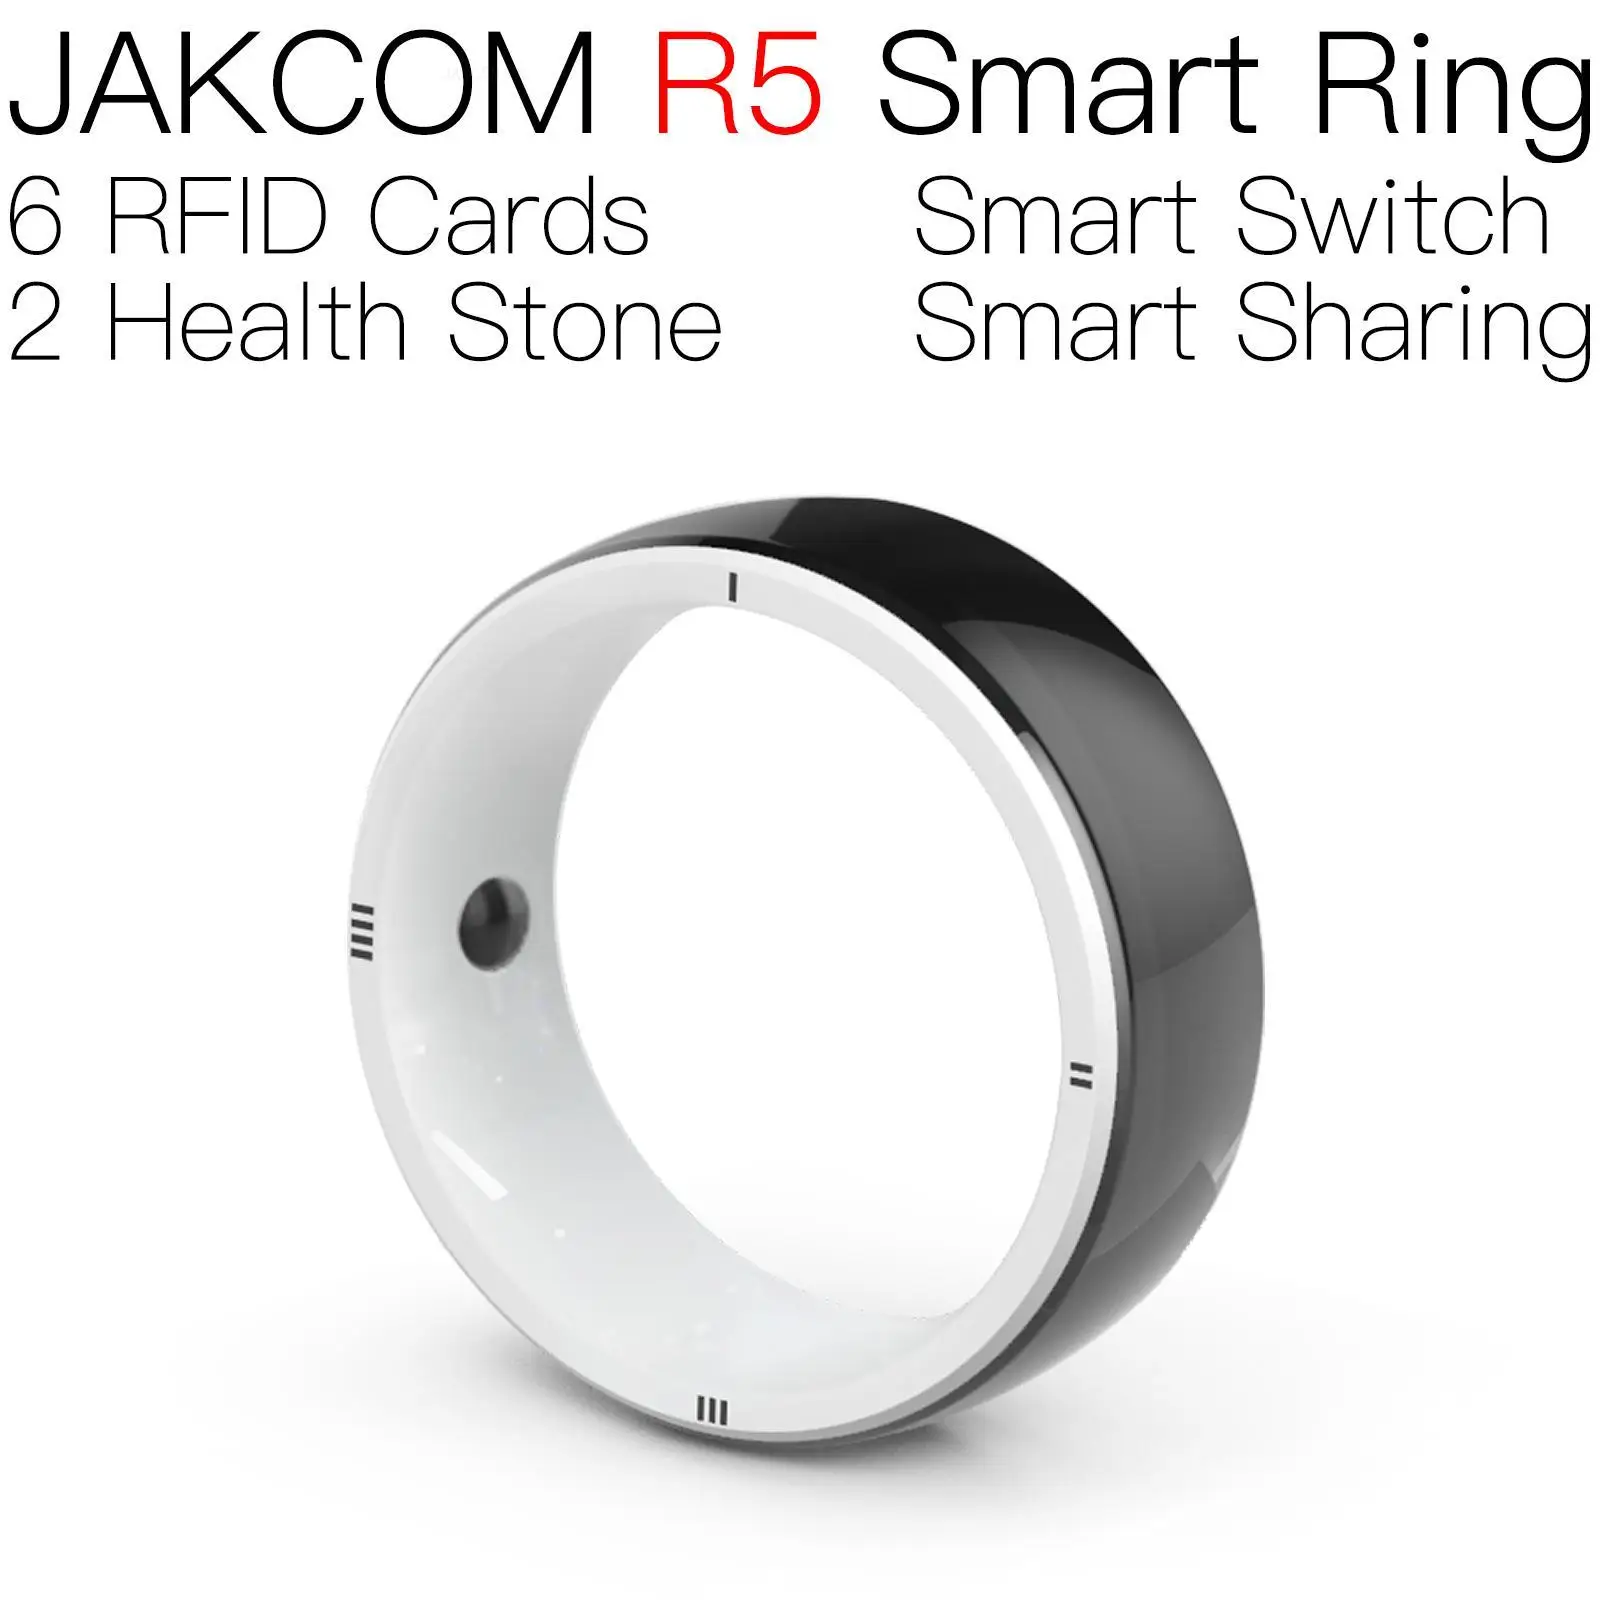 

JAKCOM R5 Smart Ring Super value than rfid movie magic tag 2nd gen s70 uid sticker self payment chip nokia3310